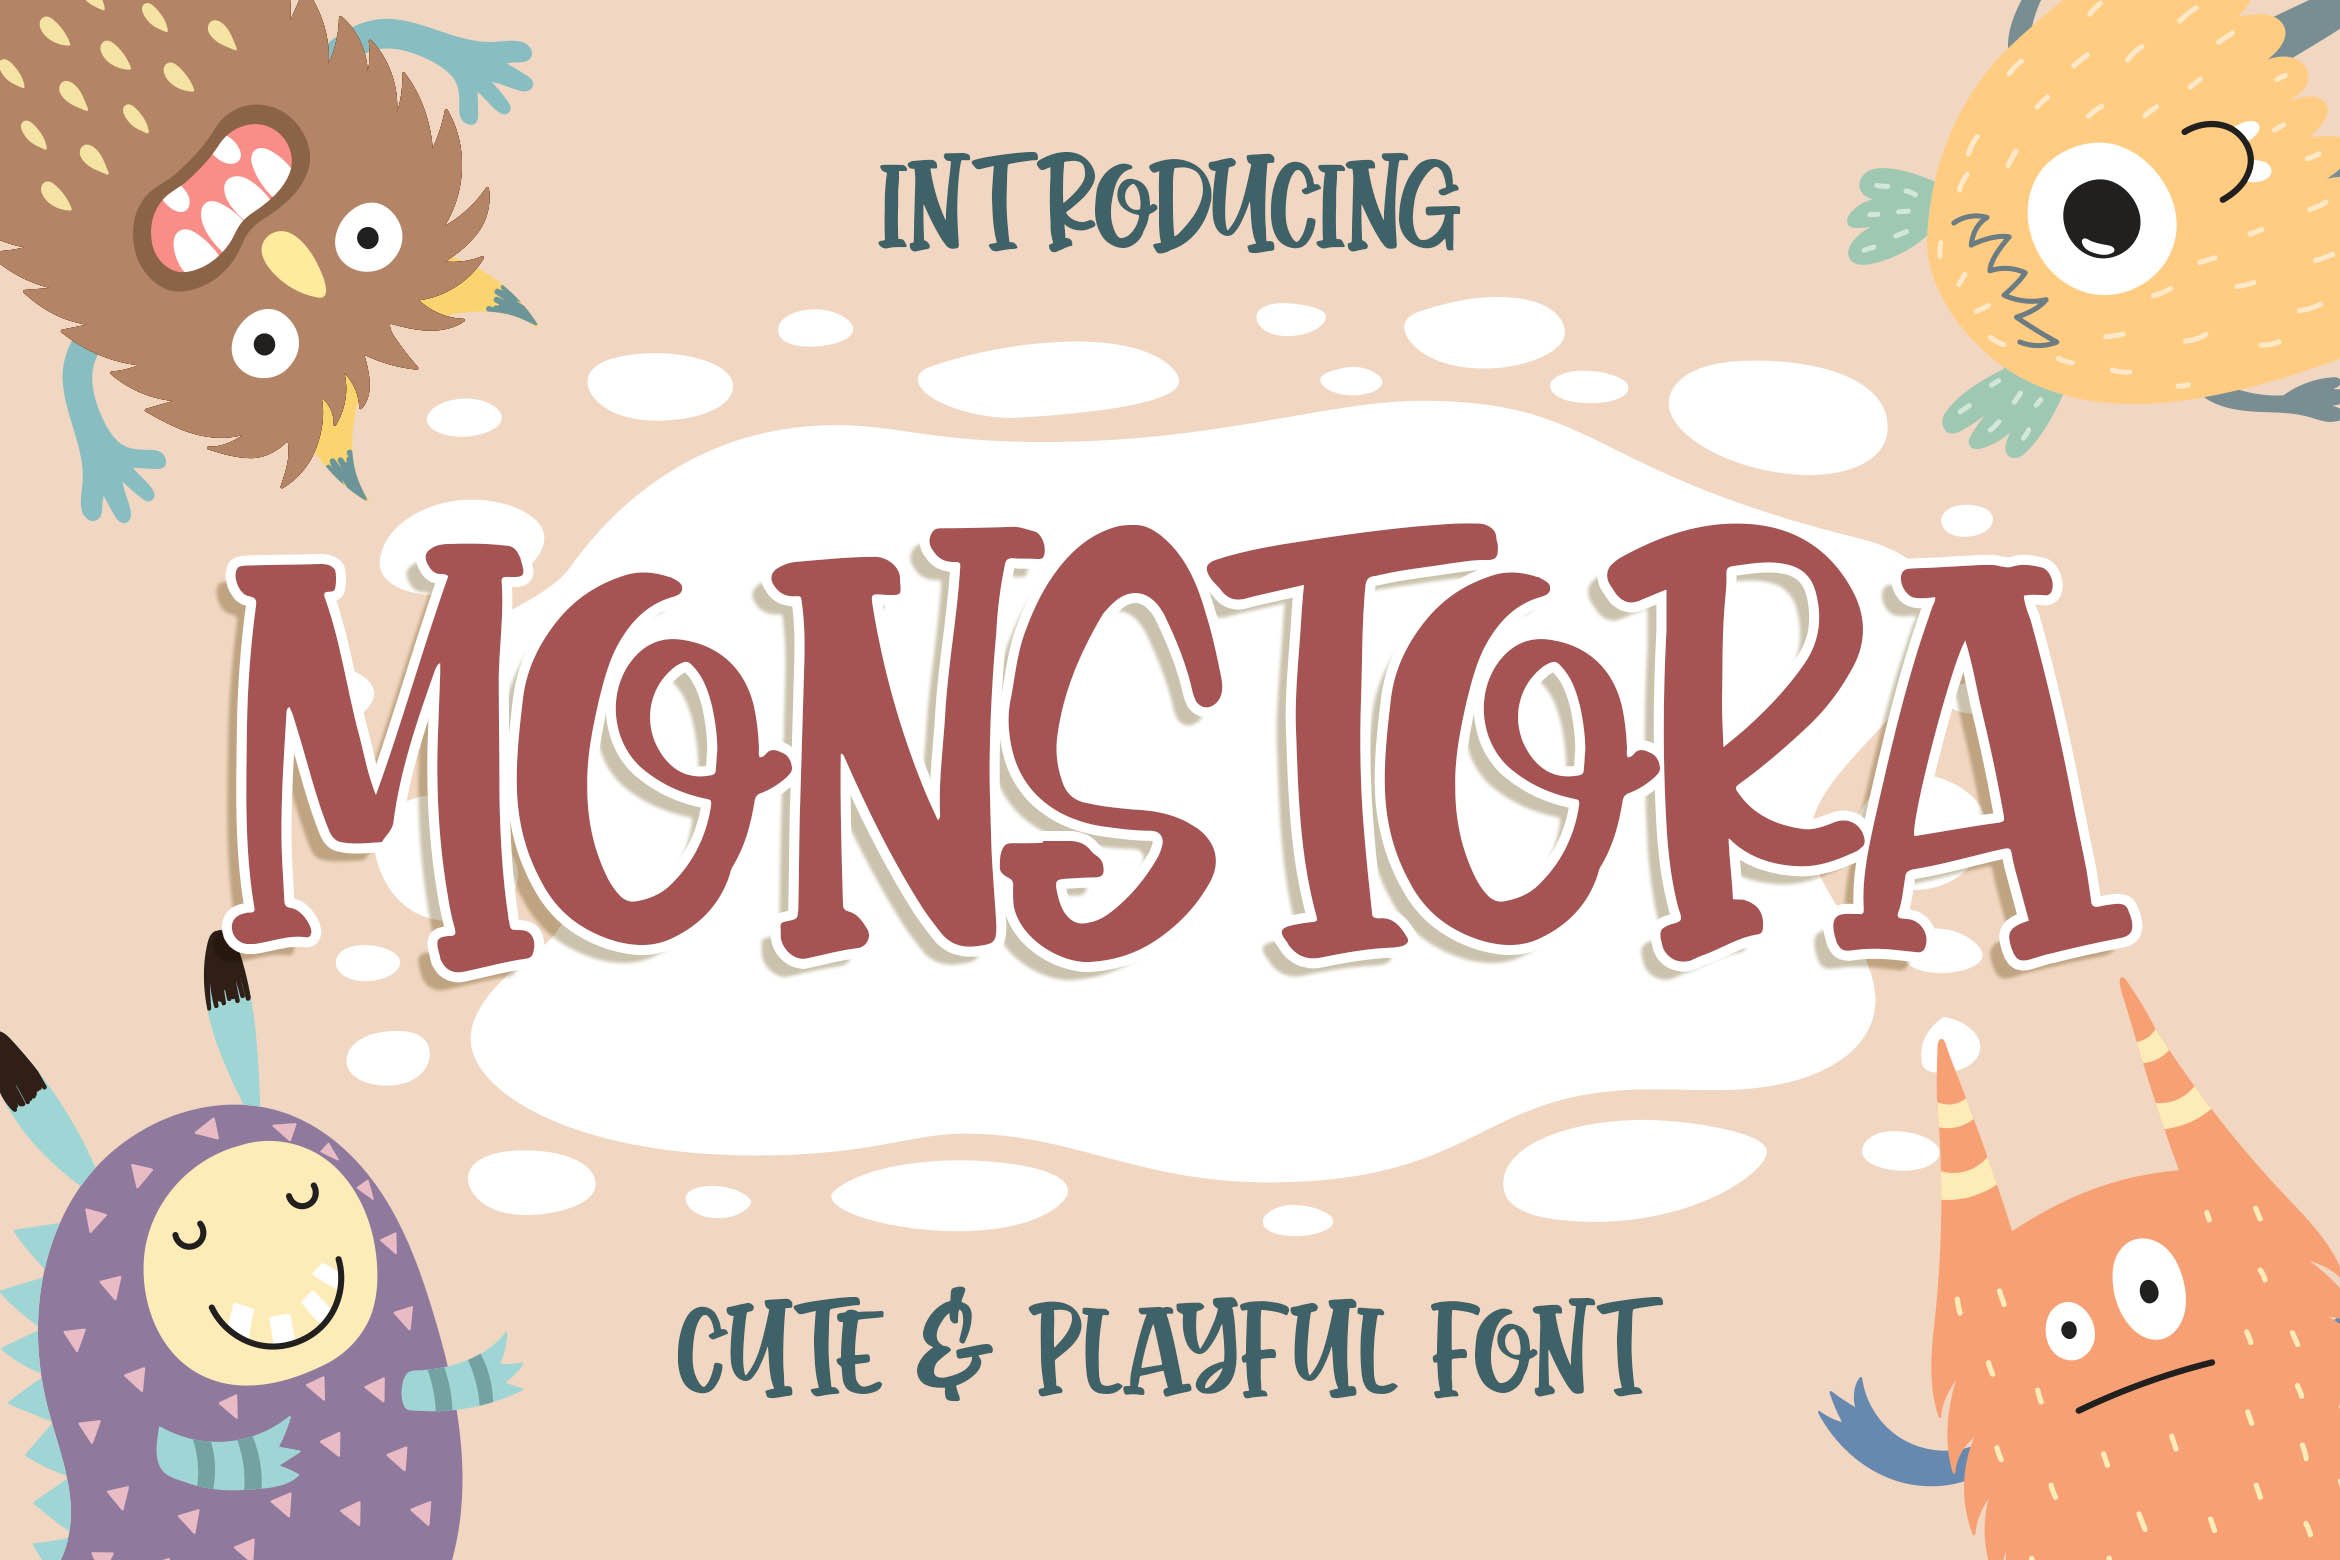 Monstora Cute & Playful Font cover image.